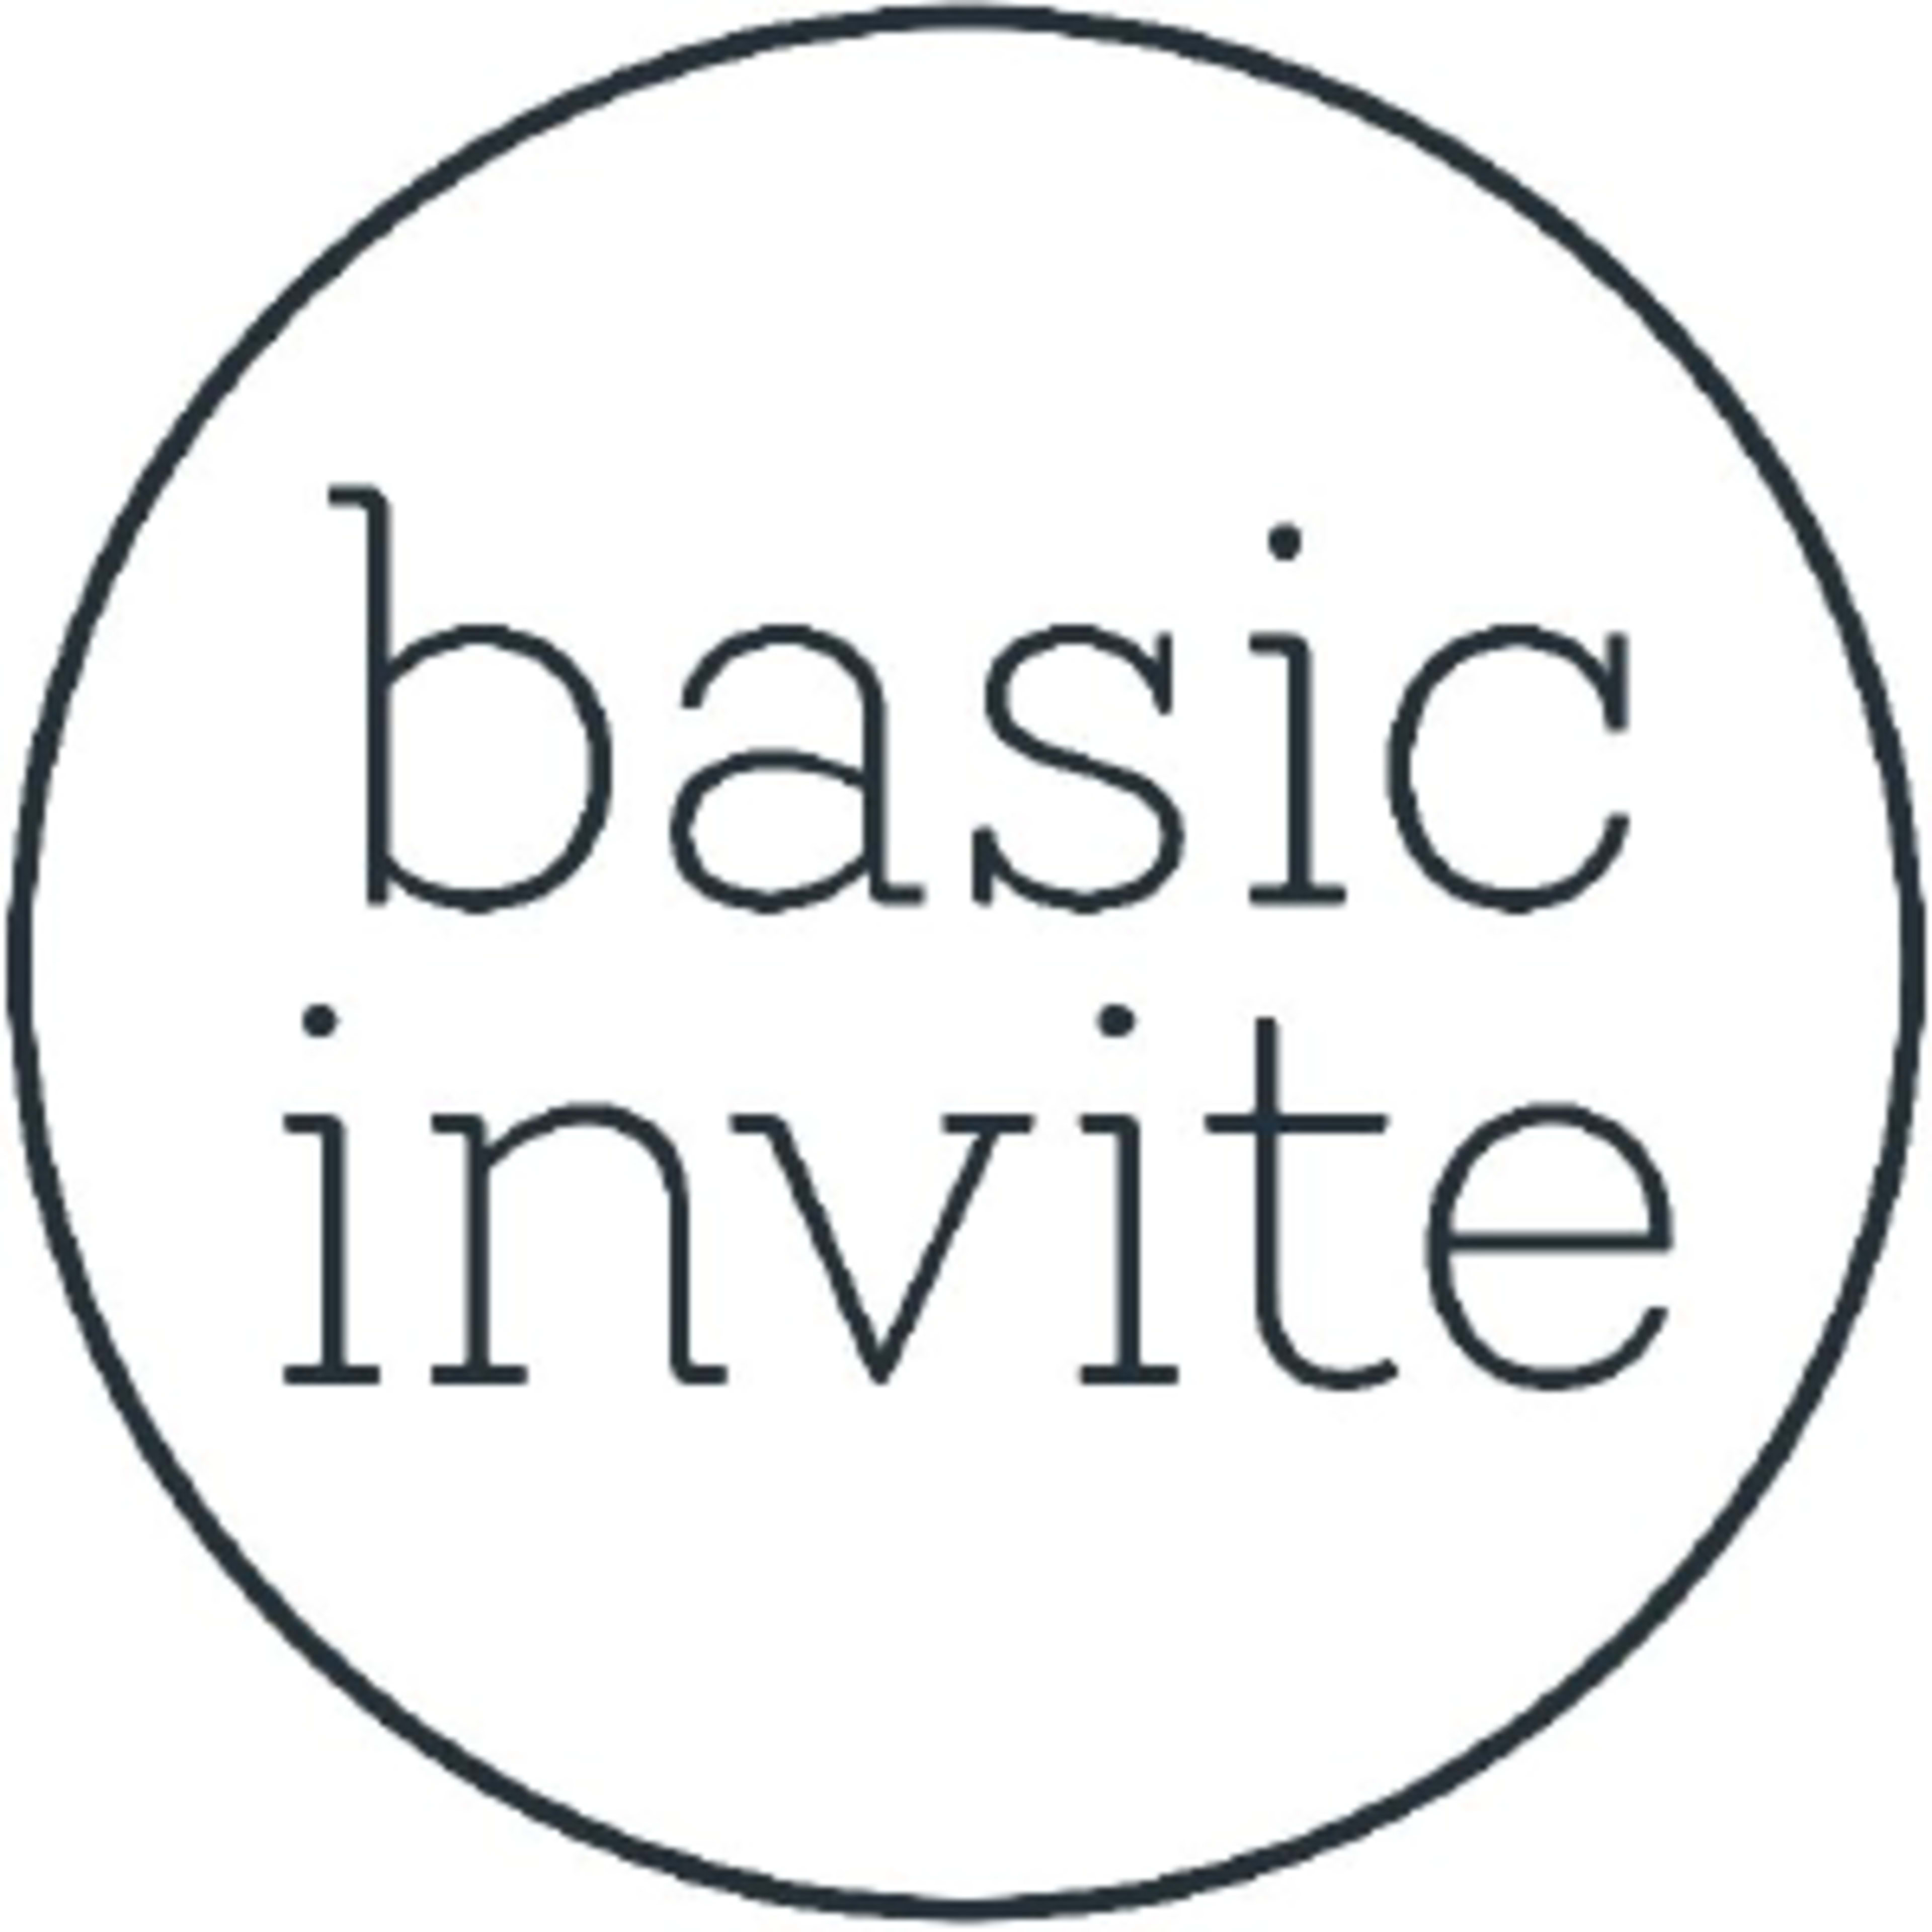 BasicInvite.com Code